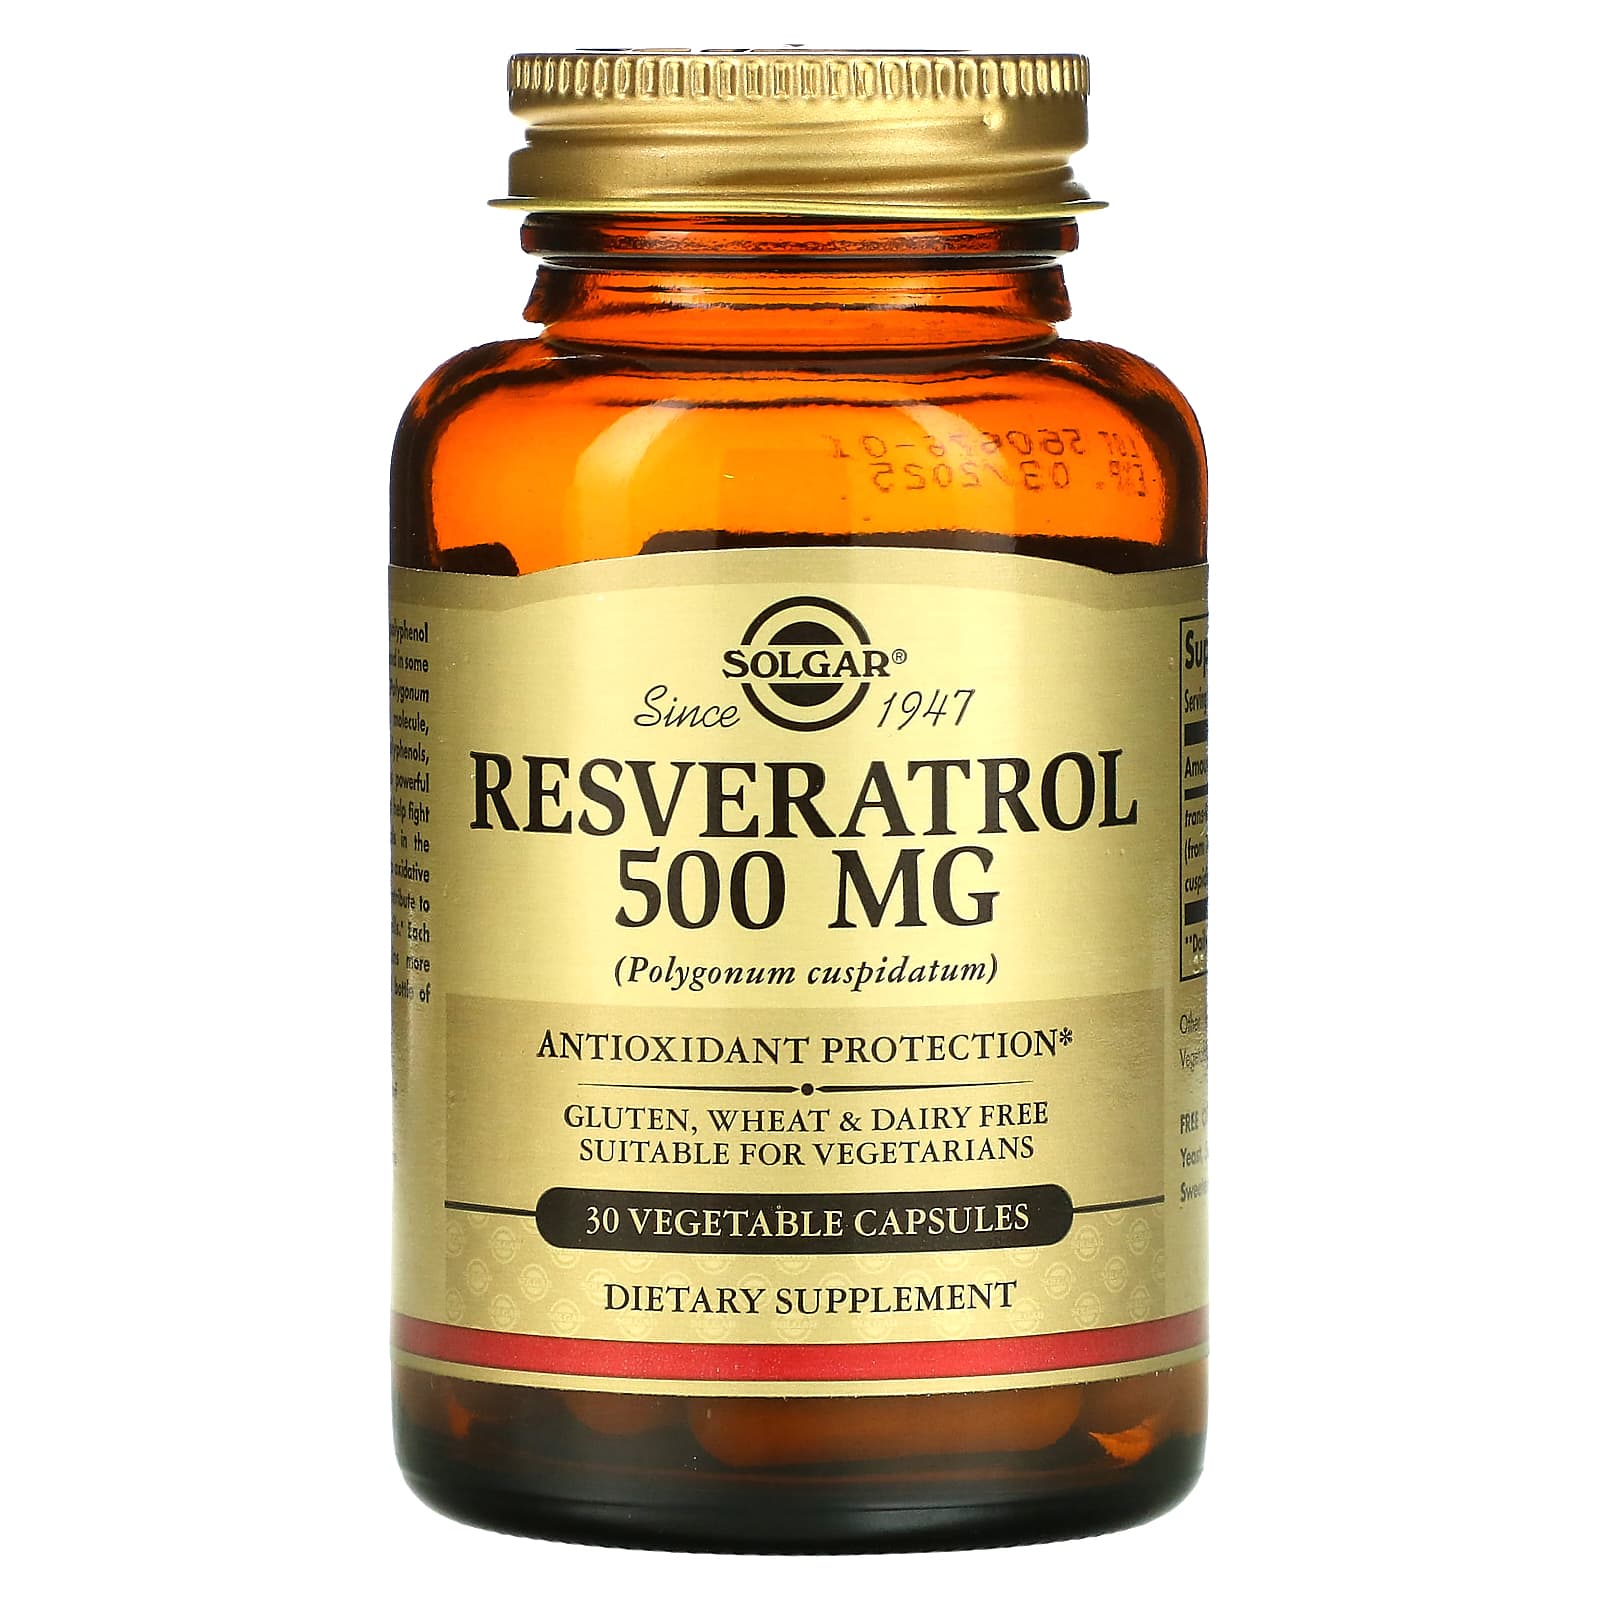 Solgar-Resveratrol-500 mg-30 Vegetable Capsules